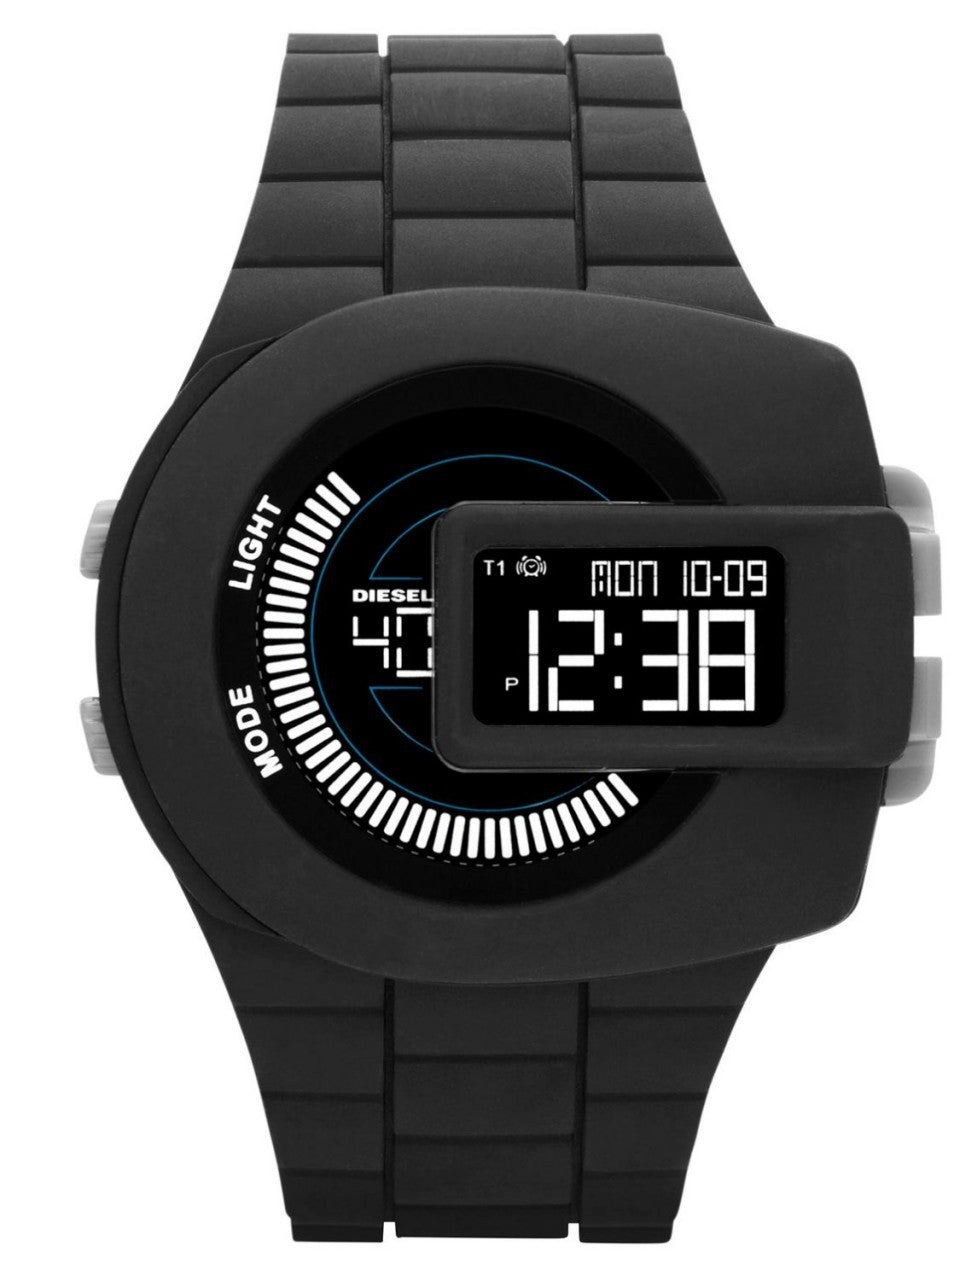 diesel MEN'S watch model DZ7274 - Watch Universe Int 